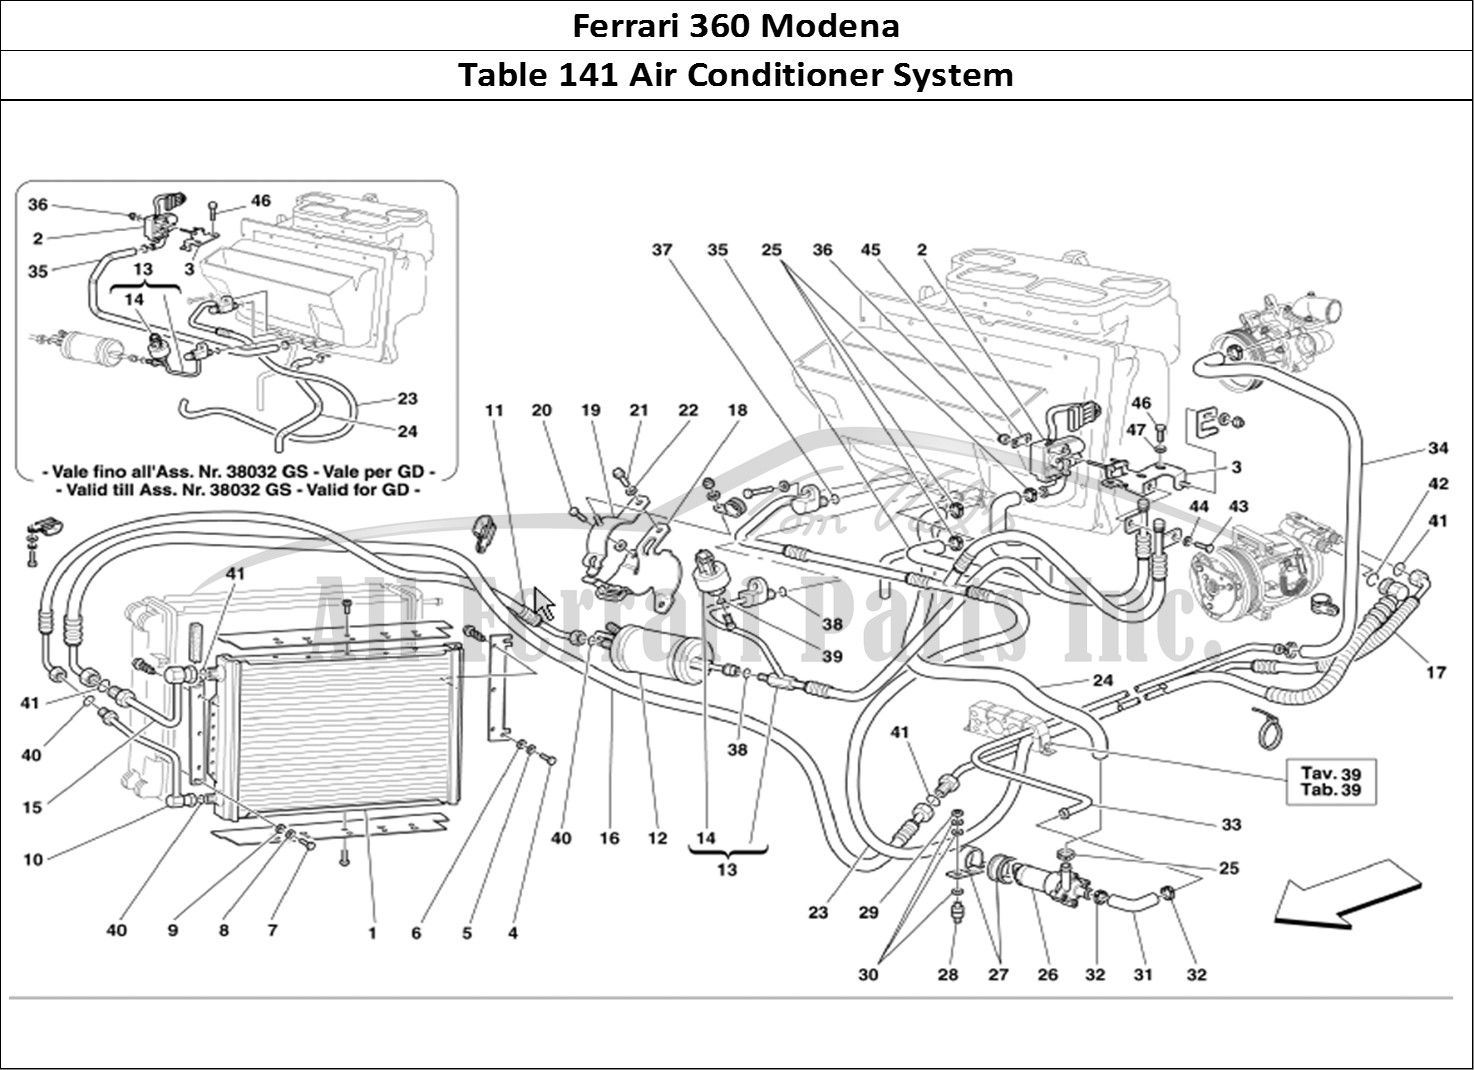 Ferrari Parts Ferrari 360 Modena Page 141 Air Conditioning System